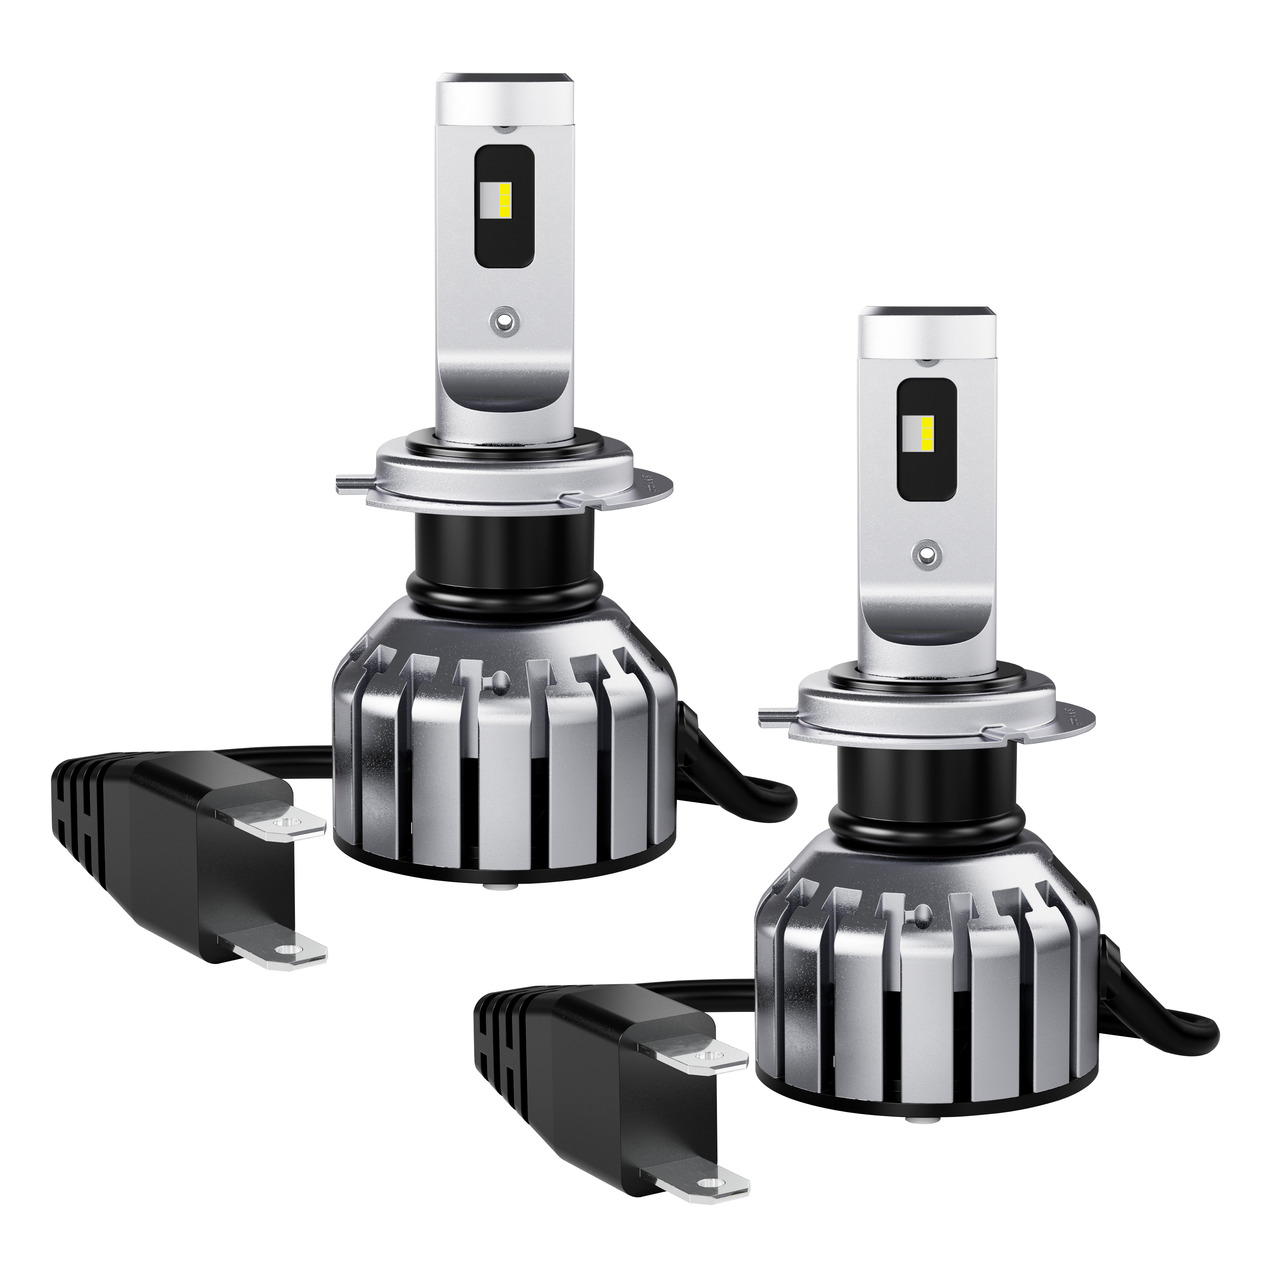 OSRAM H7-Retrofit-Kfz-LED-Nachrüstlampe NIGHT BREAKER(R) GEN 2- 12 V- 6000 K- mit StVZO-Zulassung unter KFZ